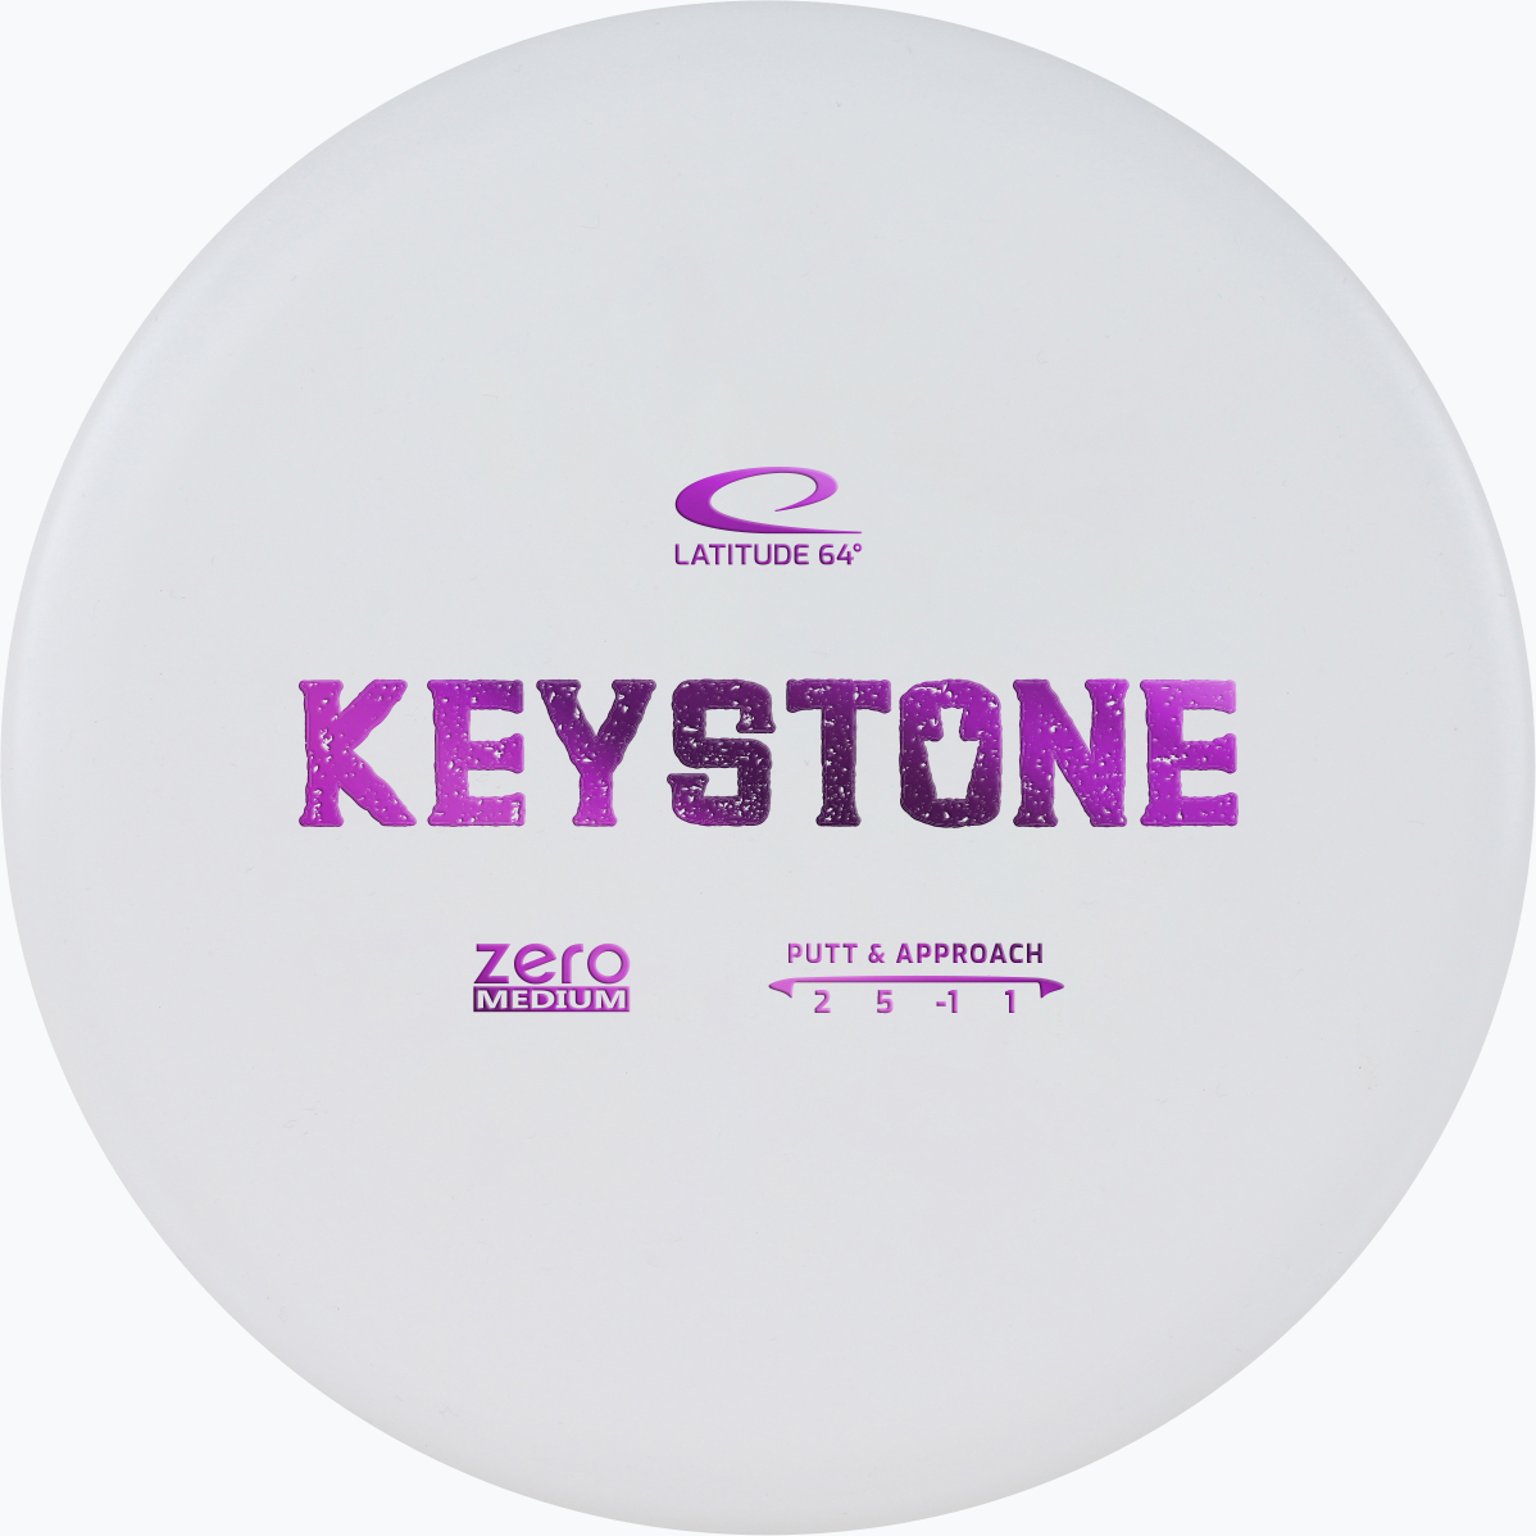 Keystone Medium Putter disc